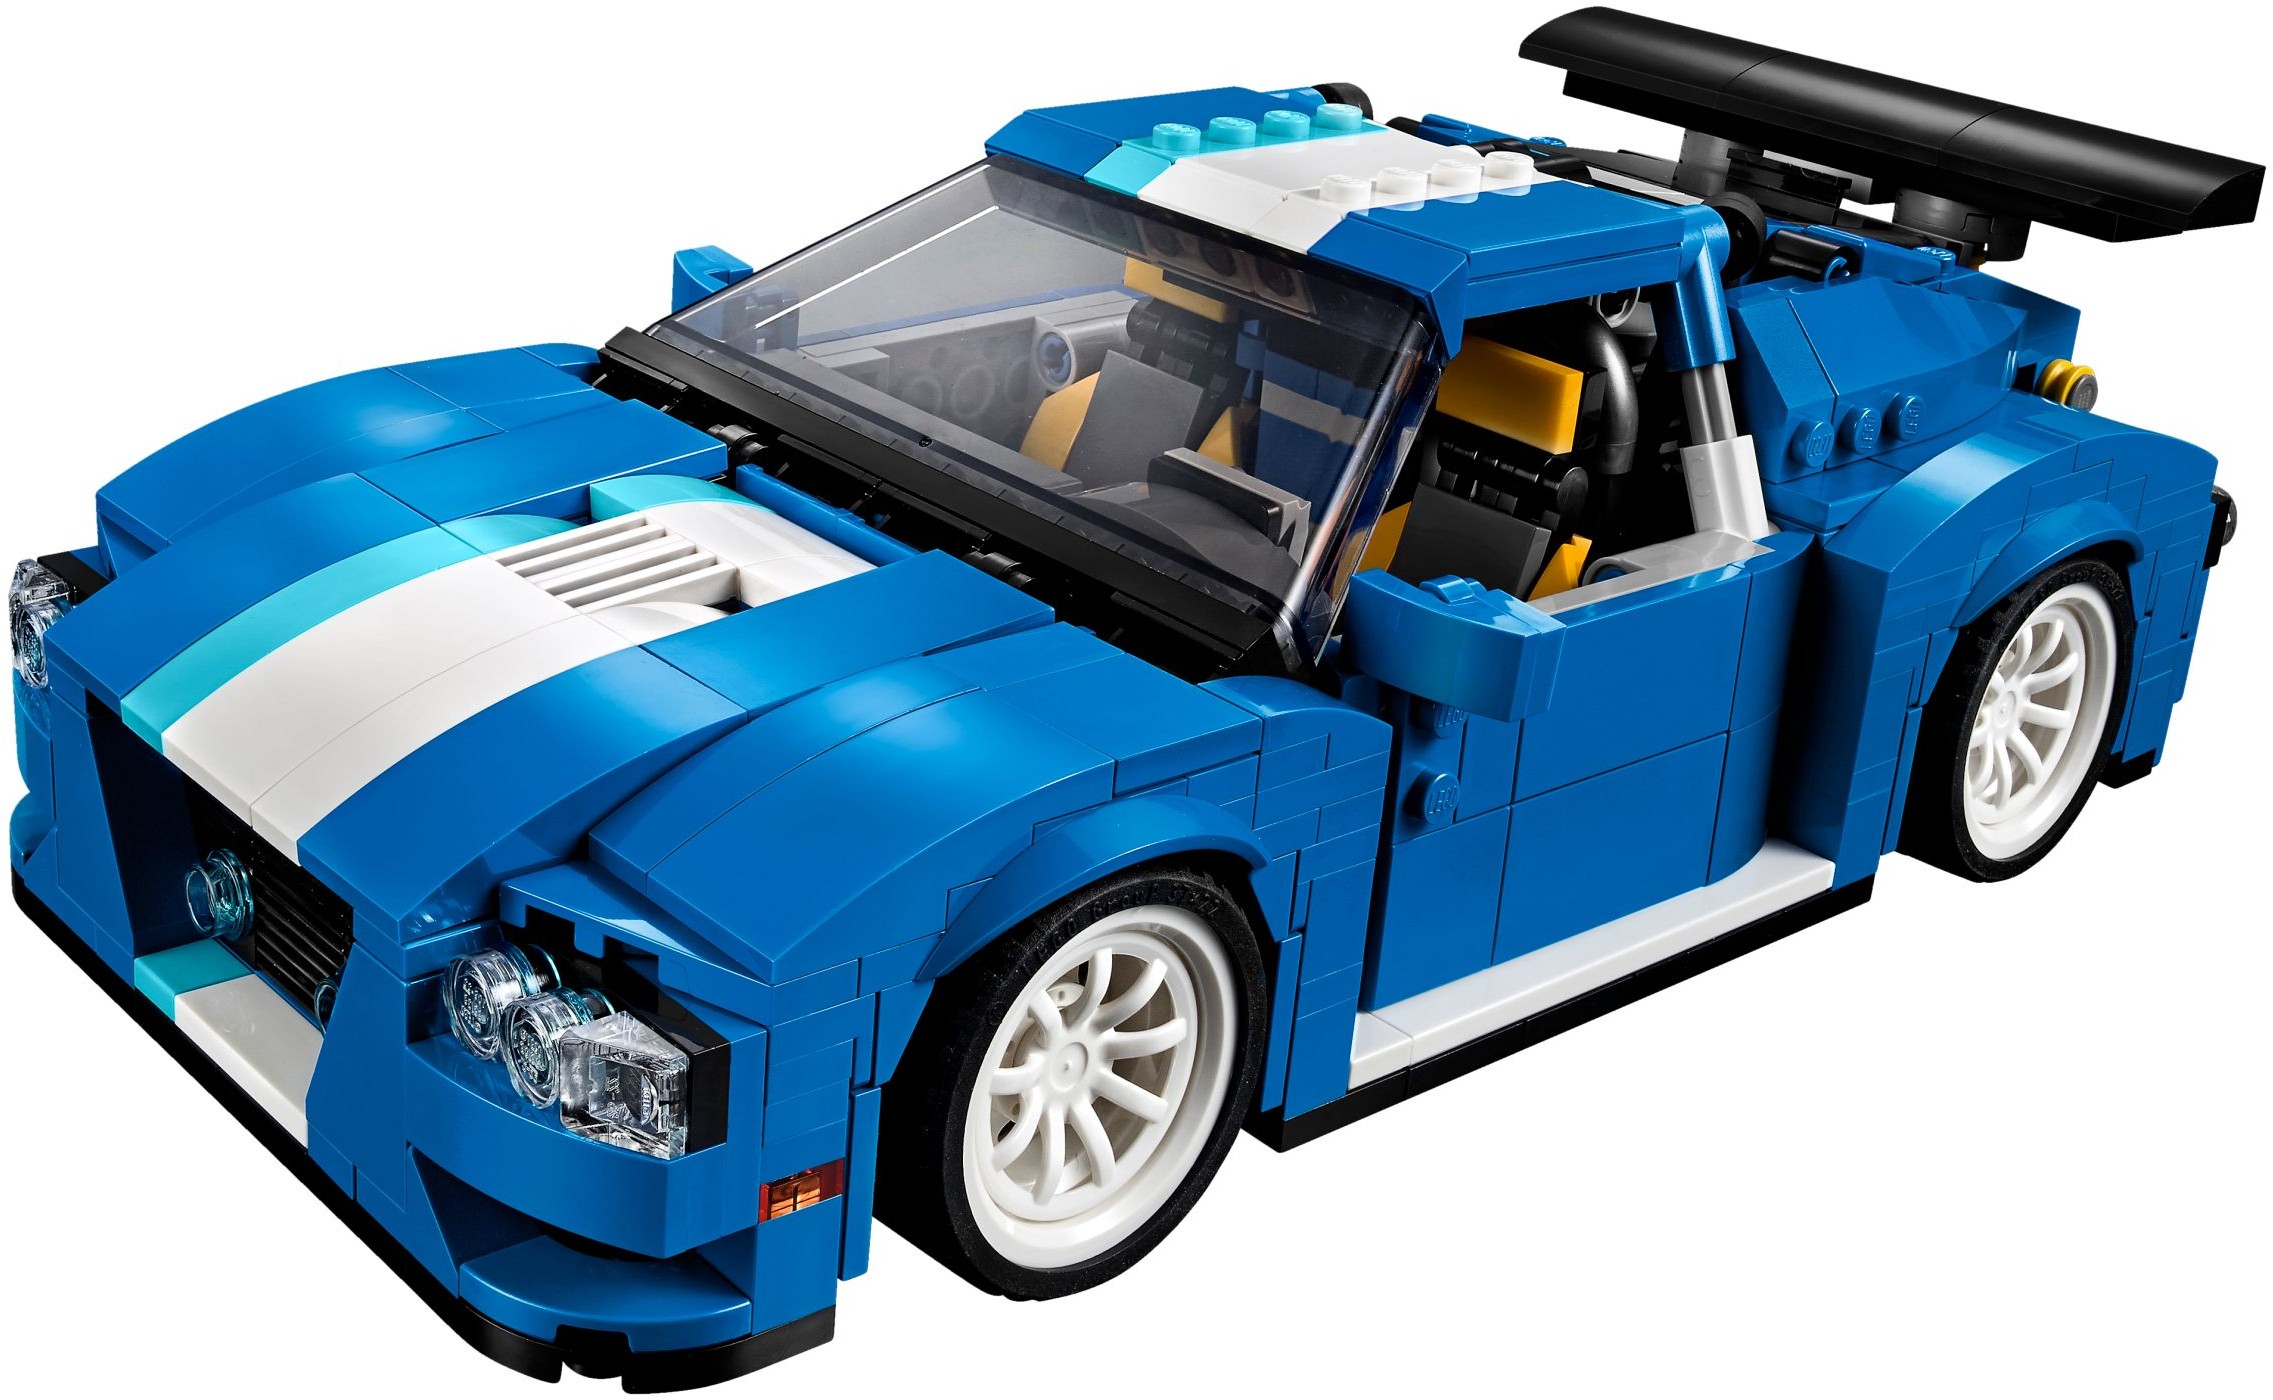 Lego 31070 Turbo Track Racer - Lego Creator set for sale best price